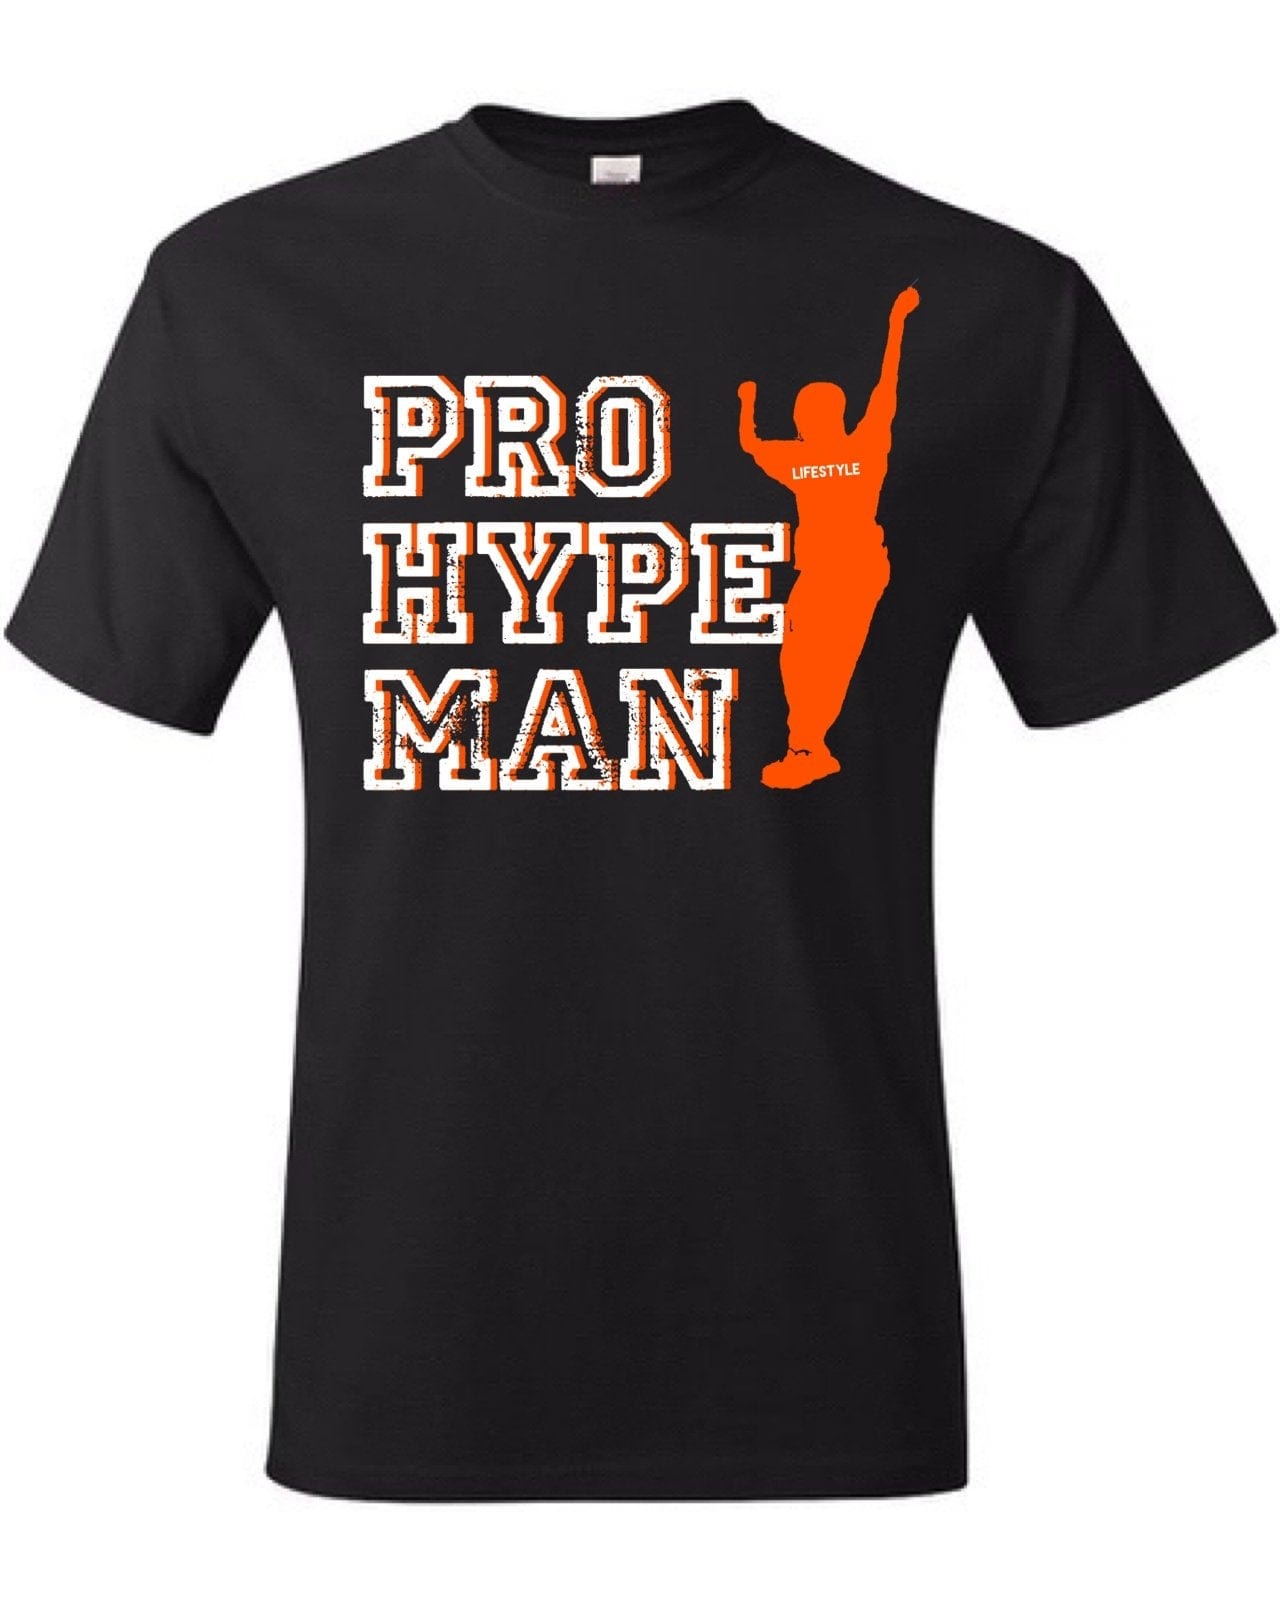 InsensitiviTees Shirts S / Black Pro Hype Man T-shirt